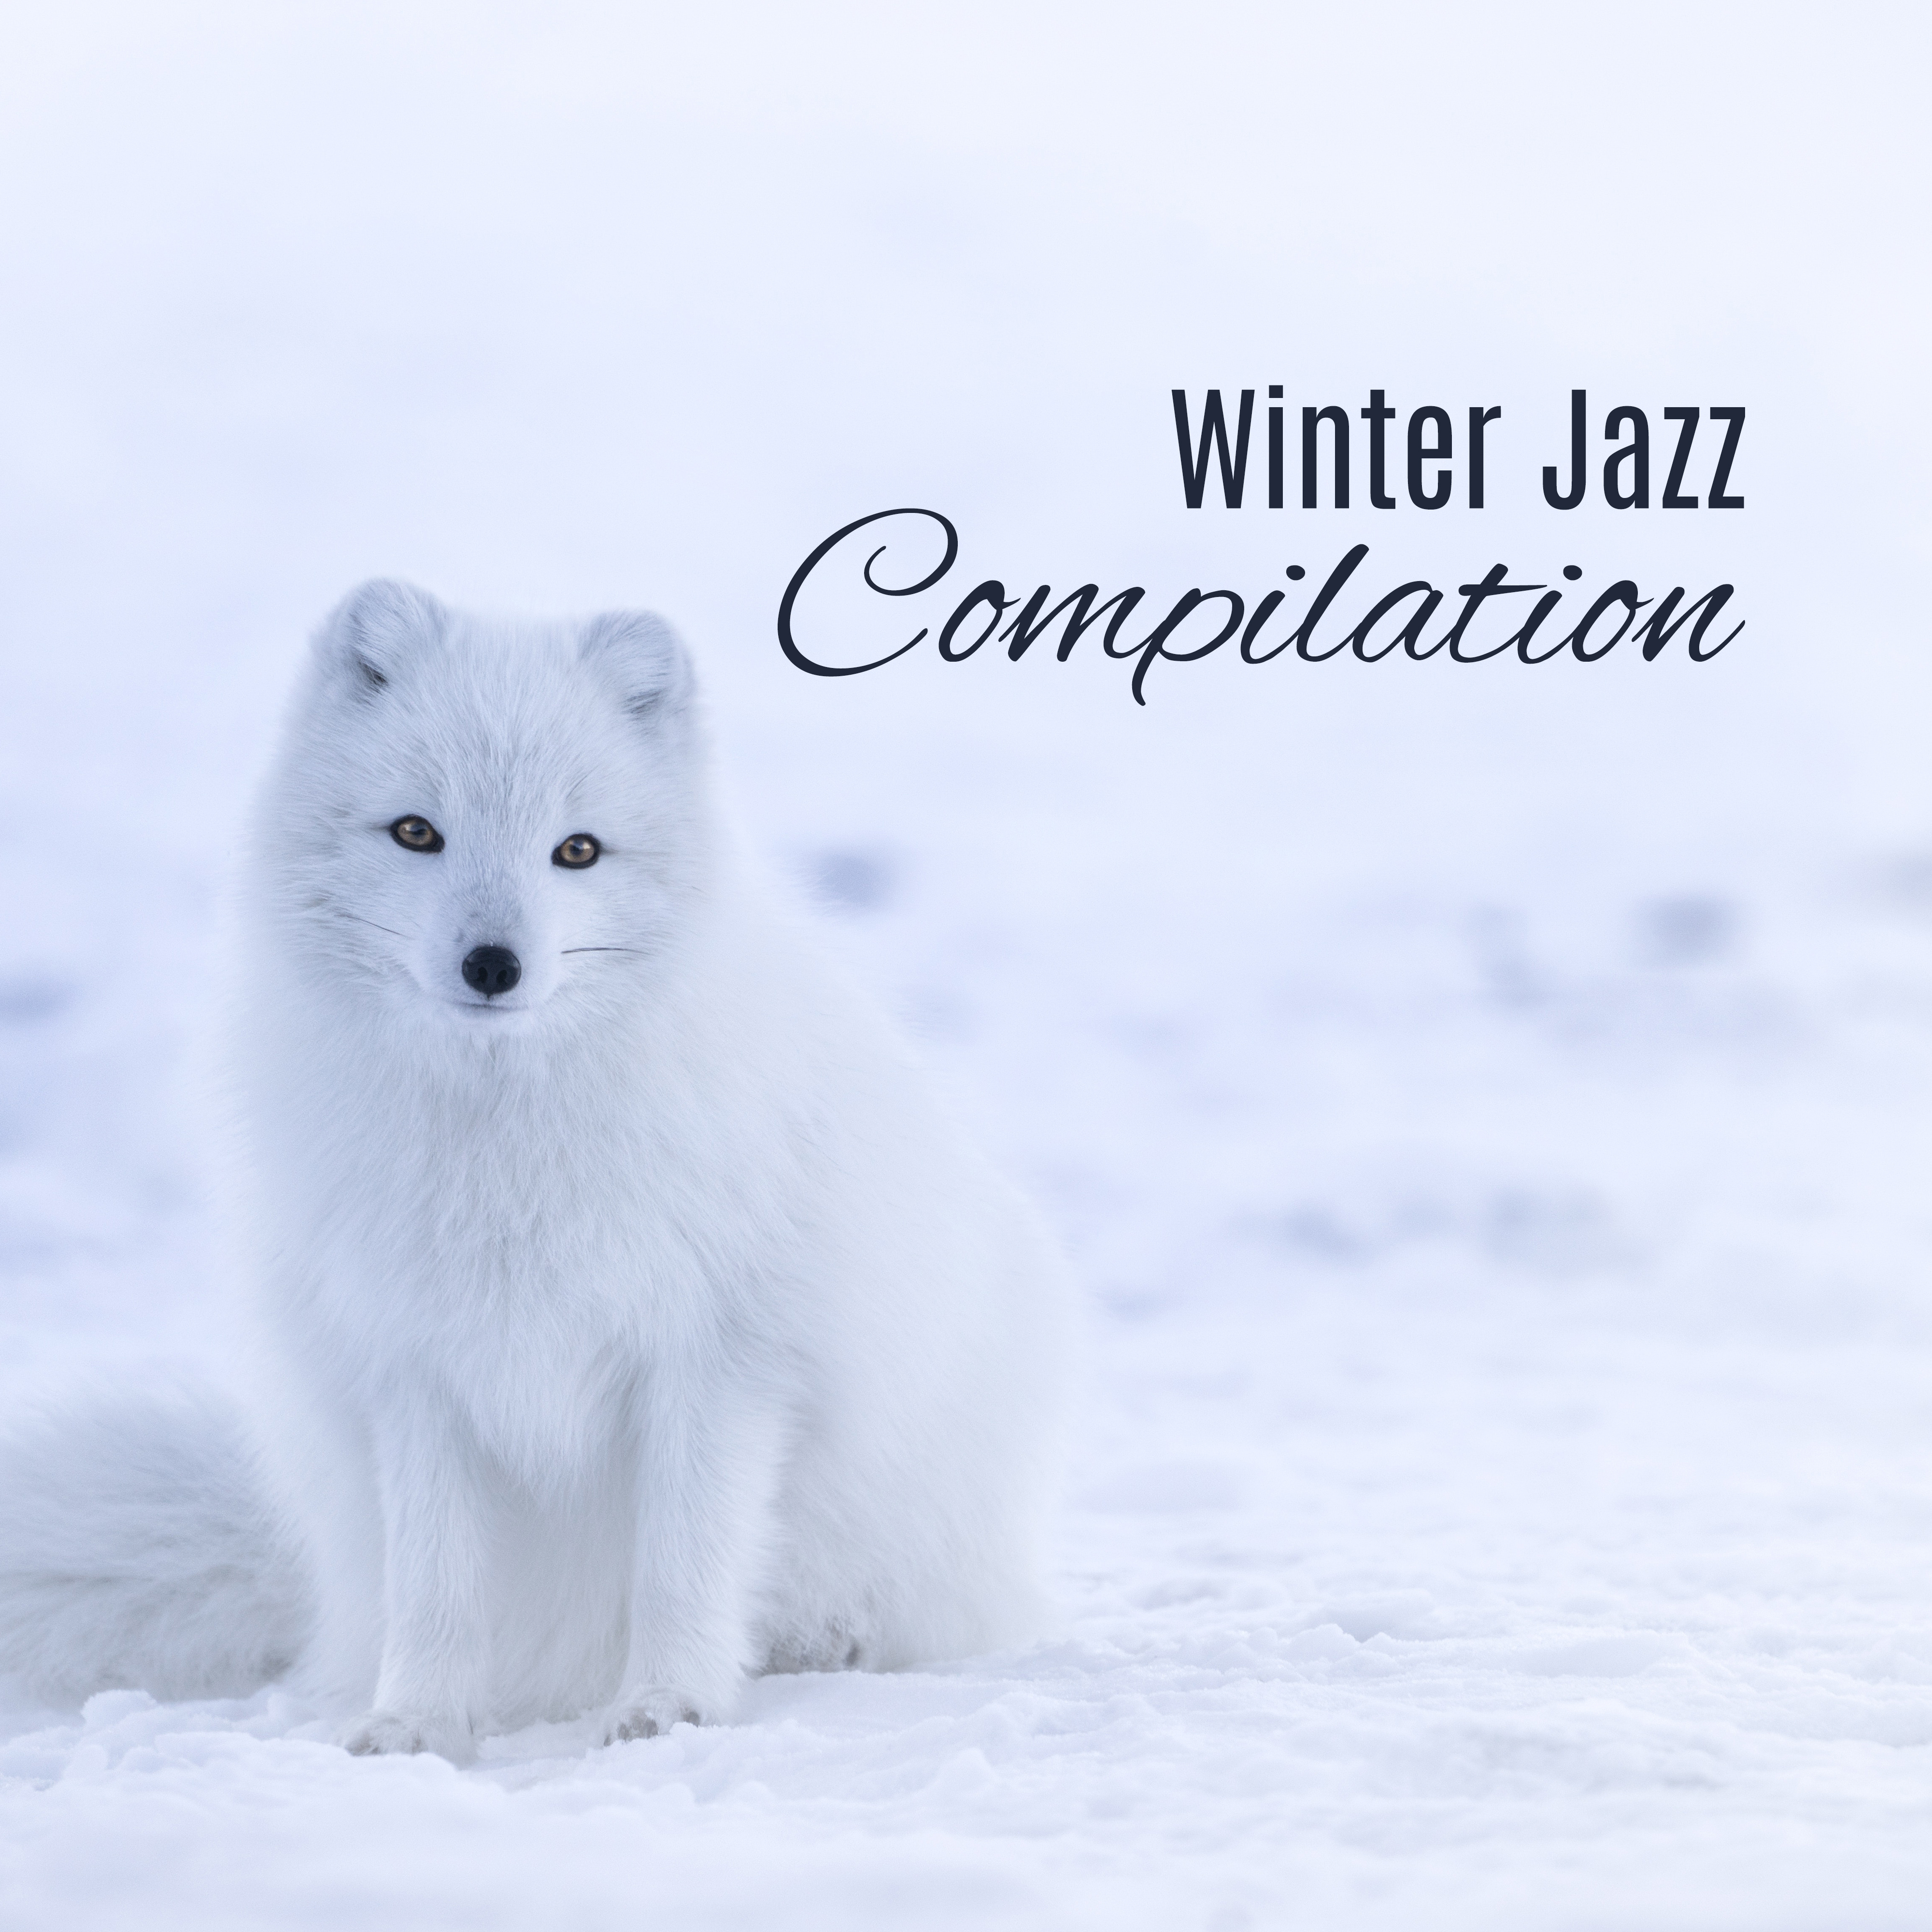 Winter Jazz Compilation